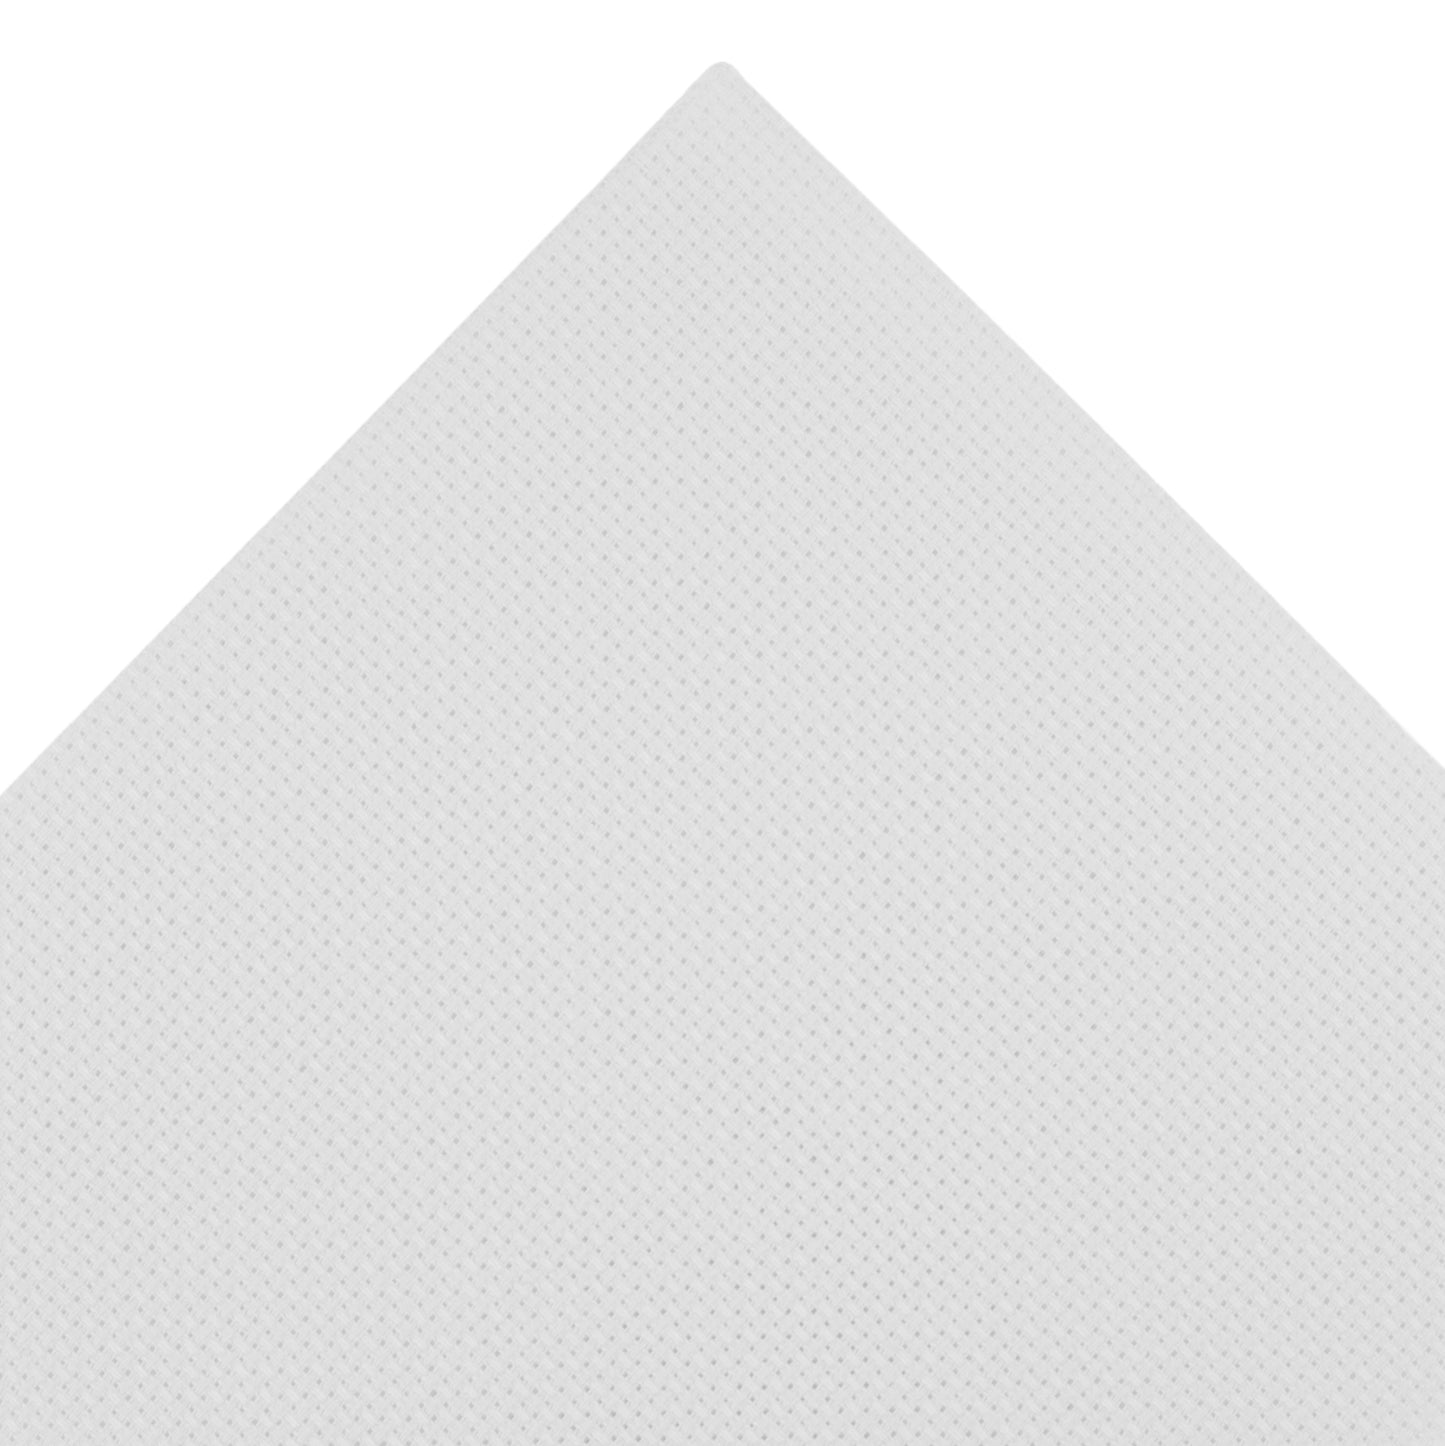 Needlecraft Fabric: Aida: 14 Count: 45 x 30cm: White